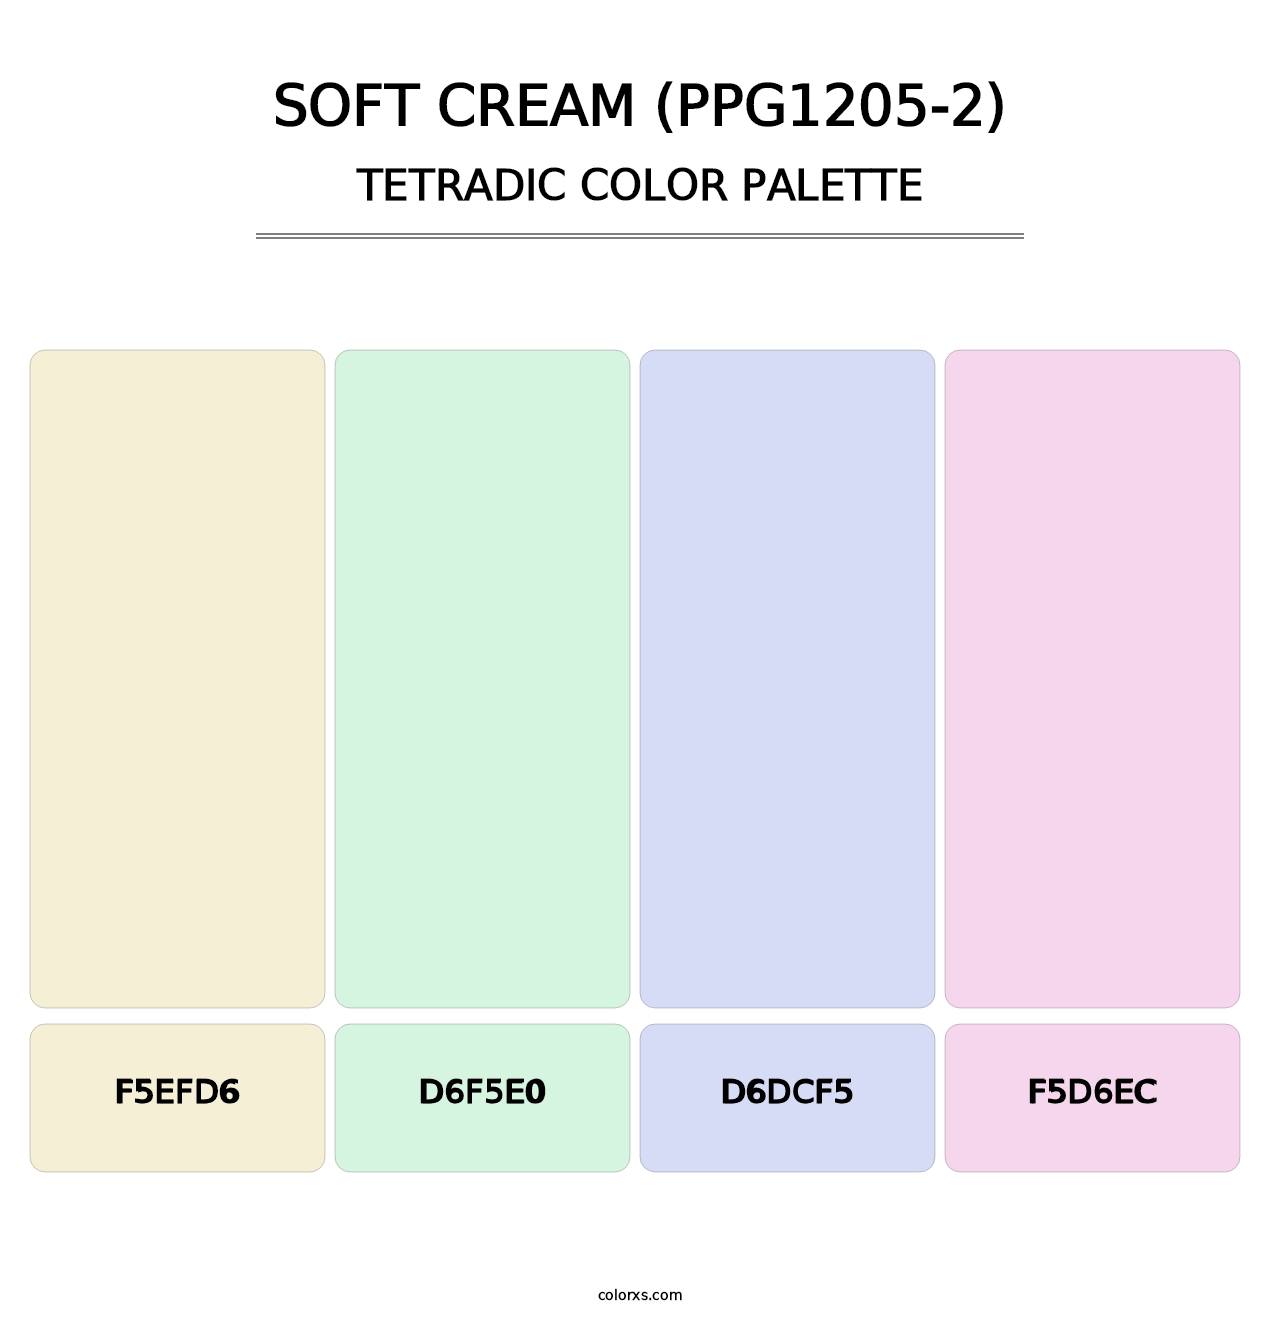 Soft Cream (PPG1205-2) - Tetradic Color Palette